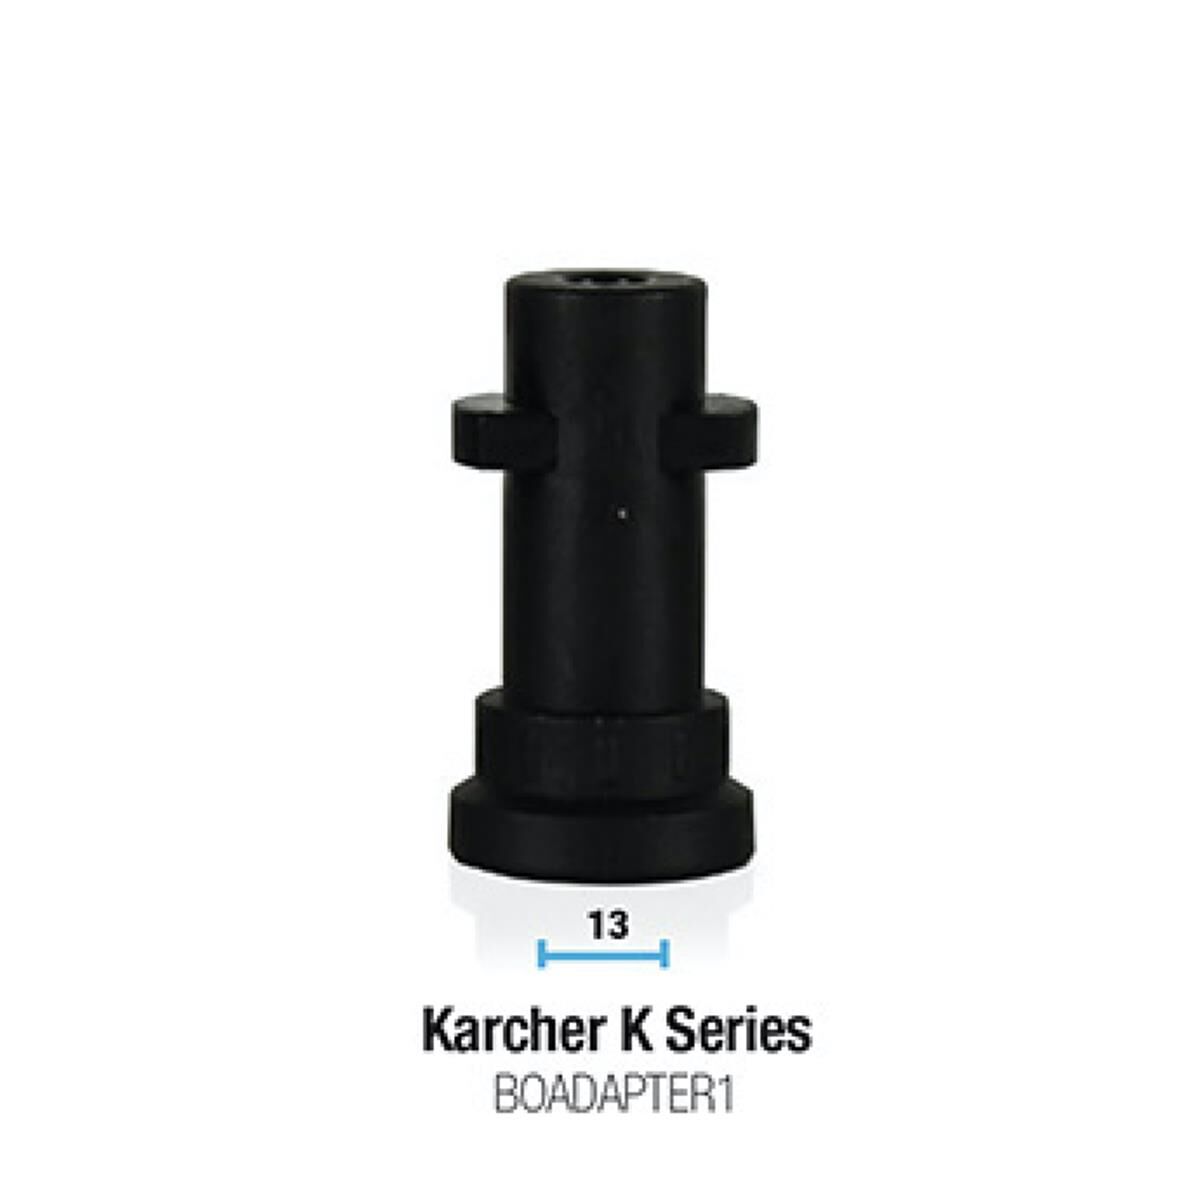 Karcher K series Adapter, , scaau_hi-res